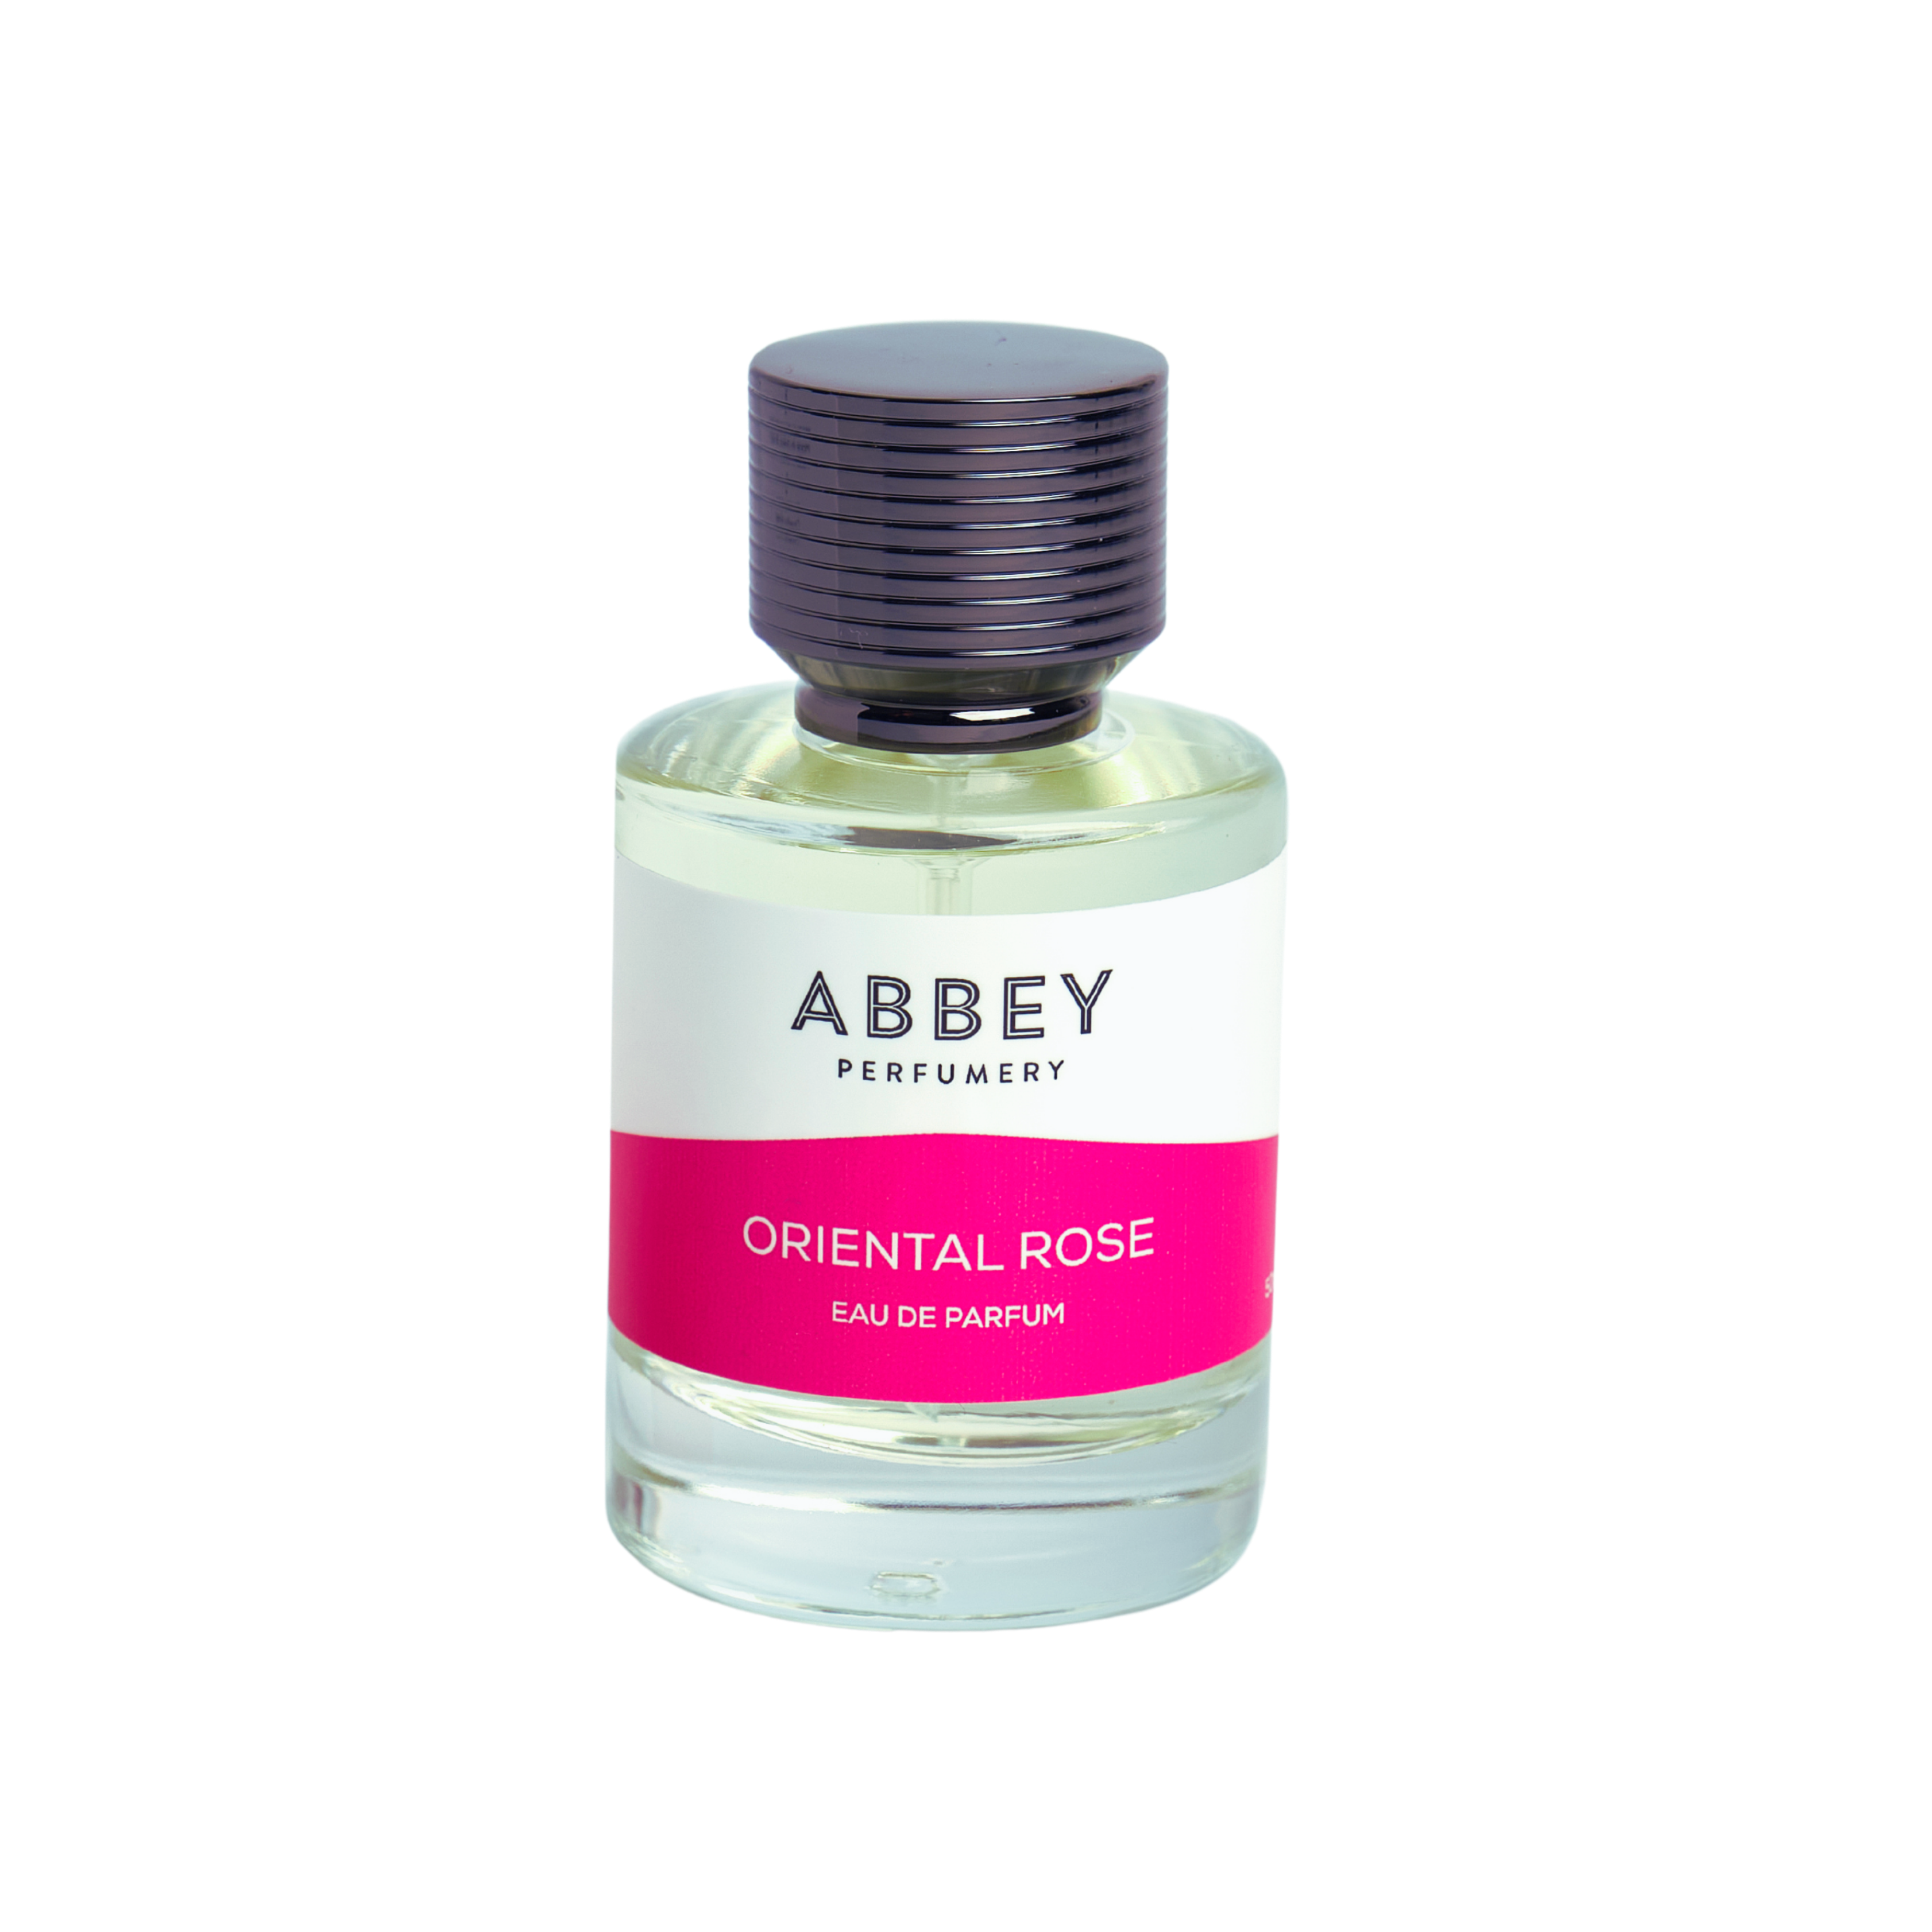 Oriental Rose perfume bottle 50ml on transparent background